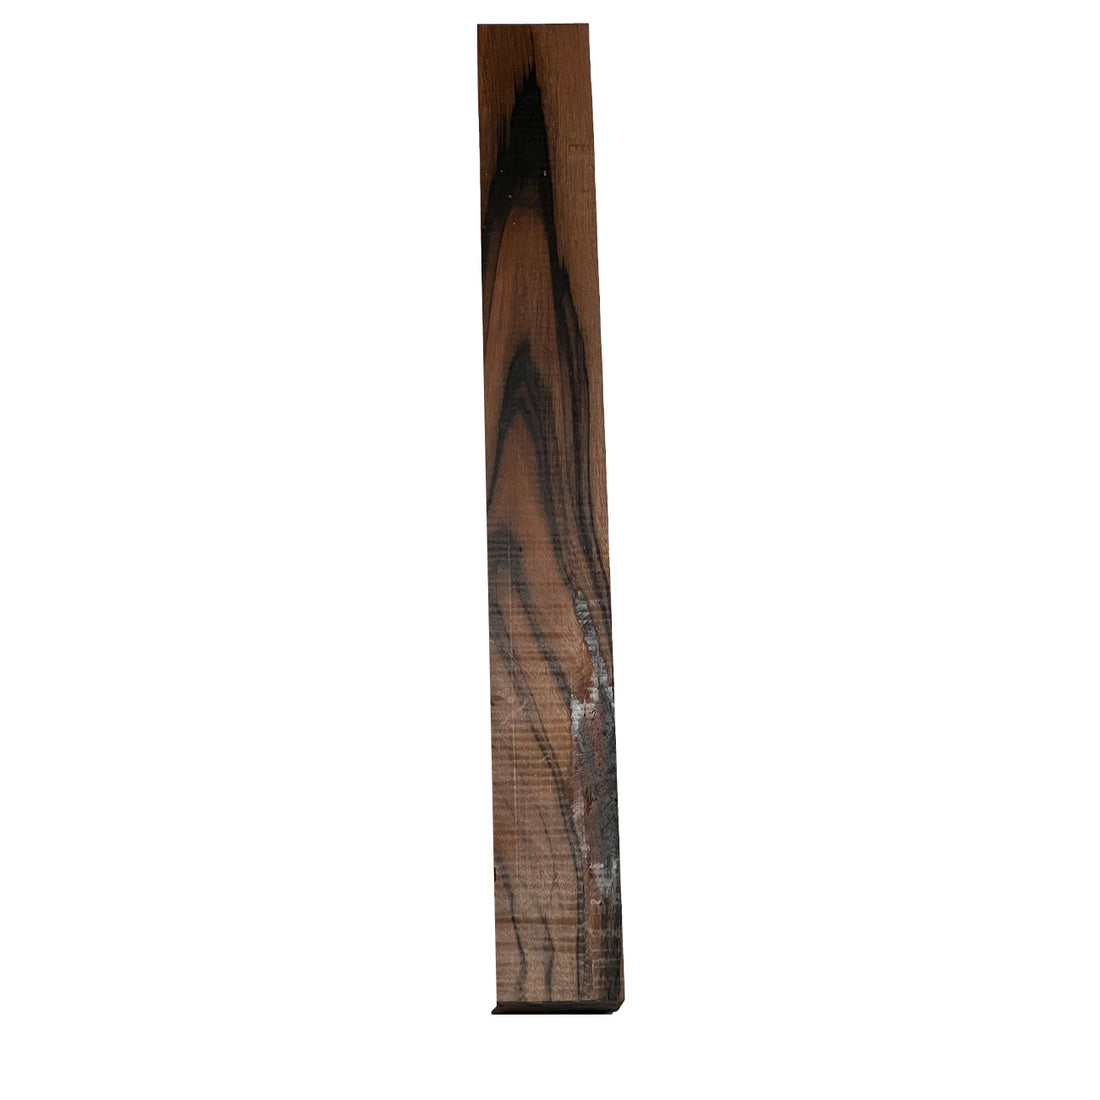 Striped Ebony Hobby Wood/ Turning Wood Blanks 1 x 1 x 12 inches - Exotic Wood Zone - Buy online Across USA 